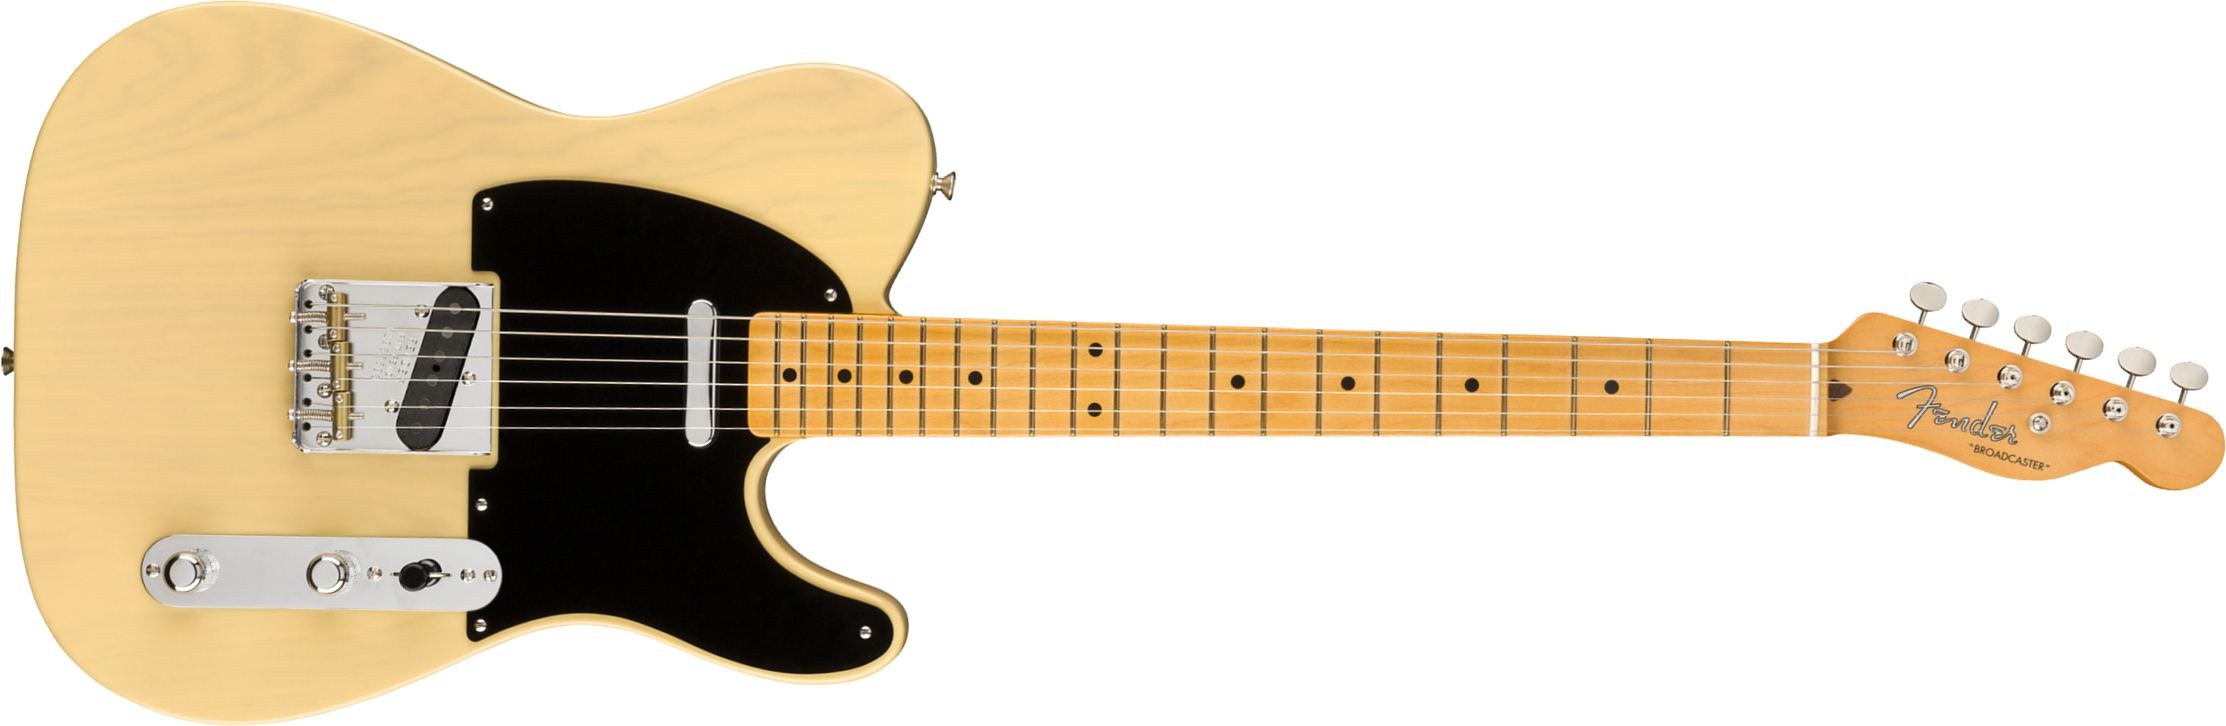 Fender Tele Broadcaster 70th Anniversary Usa Mn - Blackguard Blonde - Guitarra eléctrica con forma de tel - Main picture